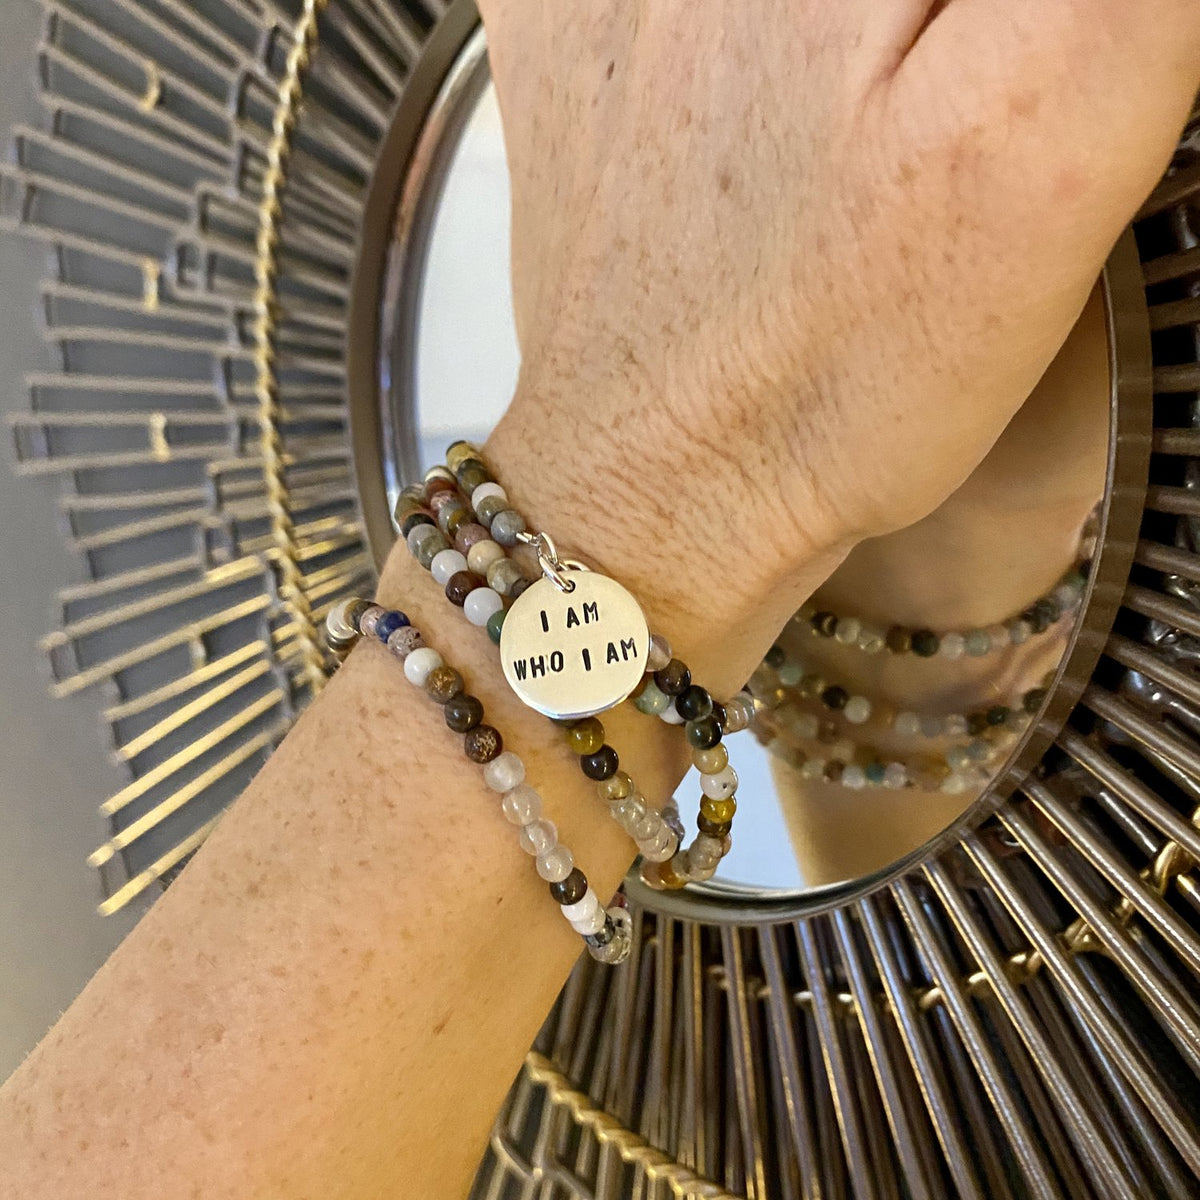 I am who I am - Affirmation Mindfulness Wrap Bracelet with a Mix of Semi-Precious Chakra Healing Stones